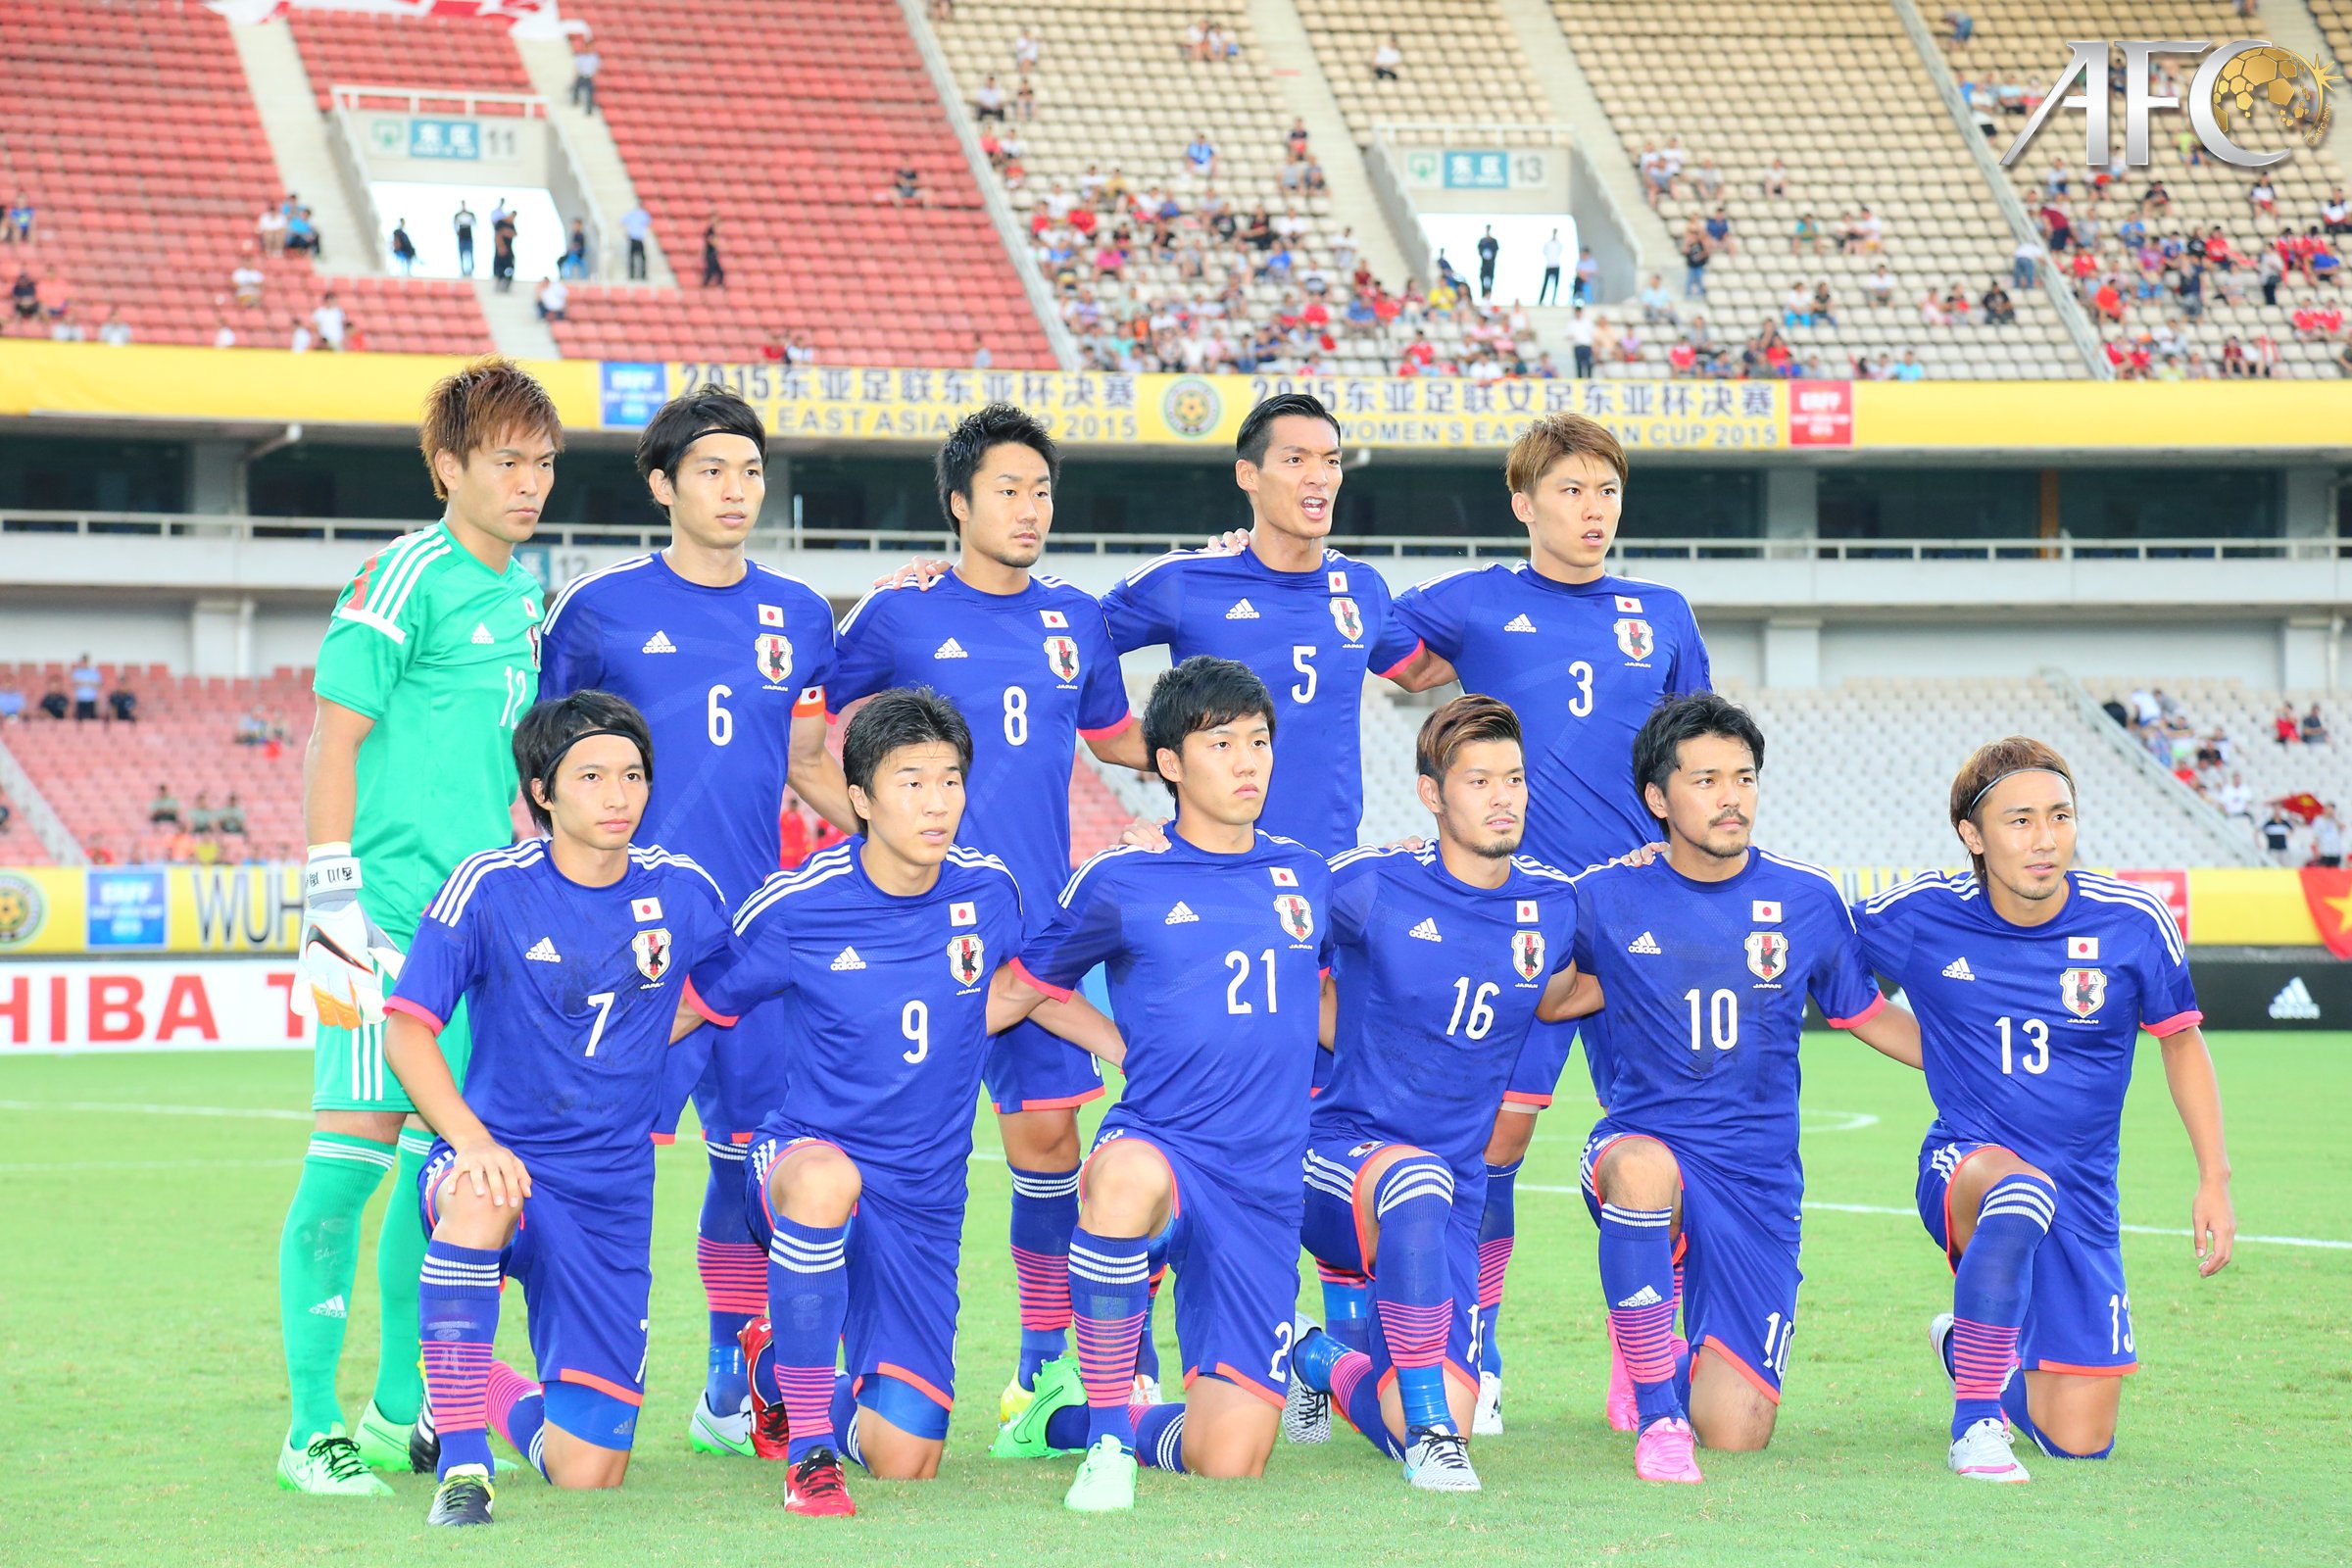 Afcアジアカップ公式 写真で振り返る10年代の日韓戦 7 日本 1 1 韓国 東 アジアカップ15 15 8 5 武漢体育中心 Samuraiblue 日韓戦 T Co Hhuqm4yzuy Twitter